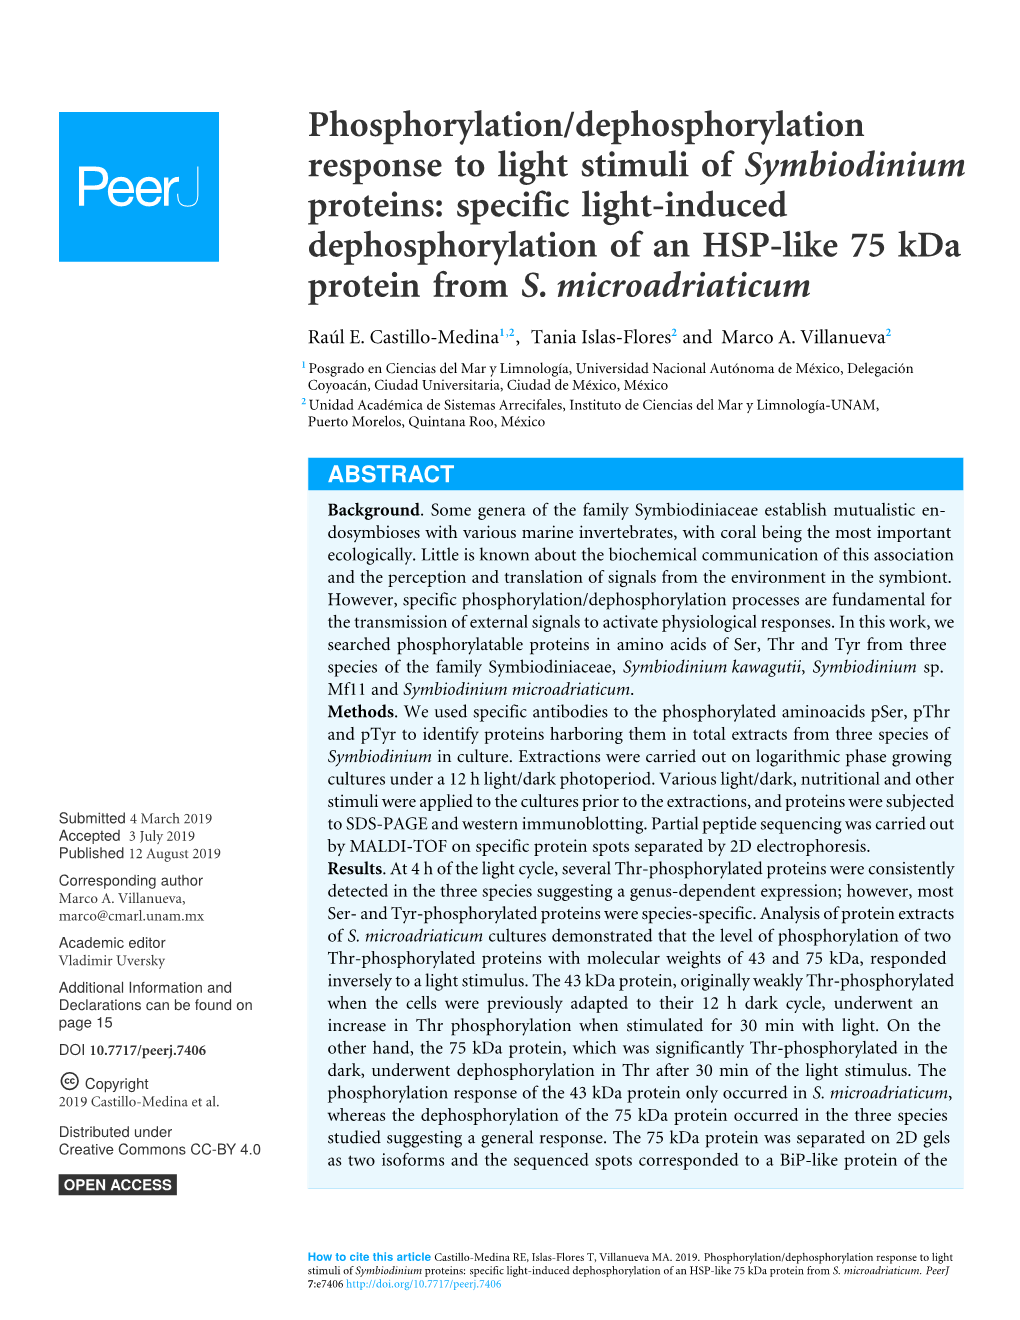 Phosphorylation/Dephosphorylation Response to Light Stimuli of Symbiodinium Proteins: Specific Light-Induced Dephosphorylation of an HSP-Like 75 Kda Protein from S